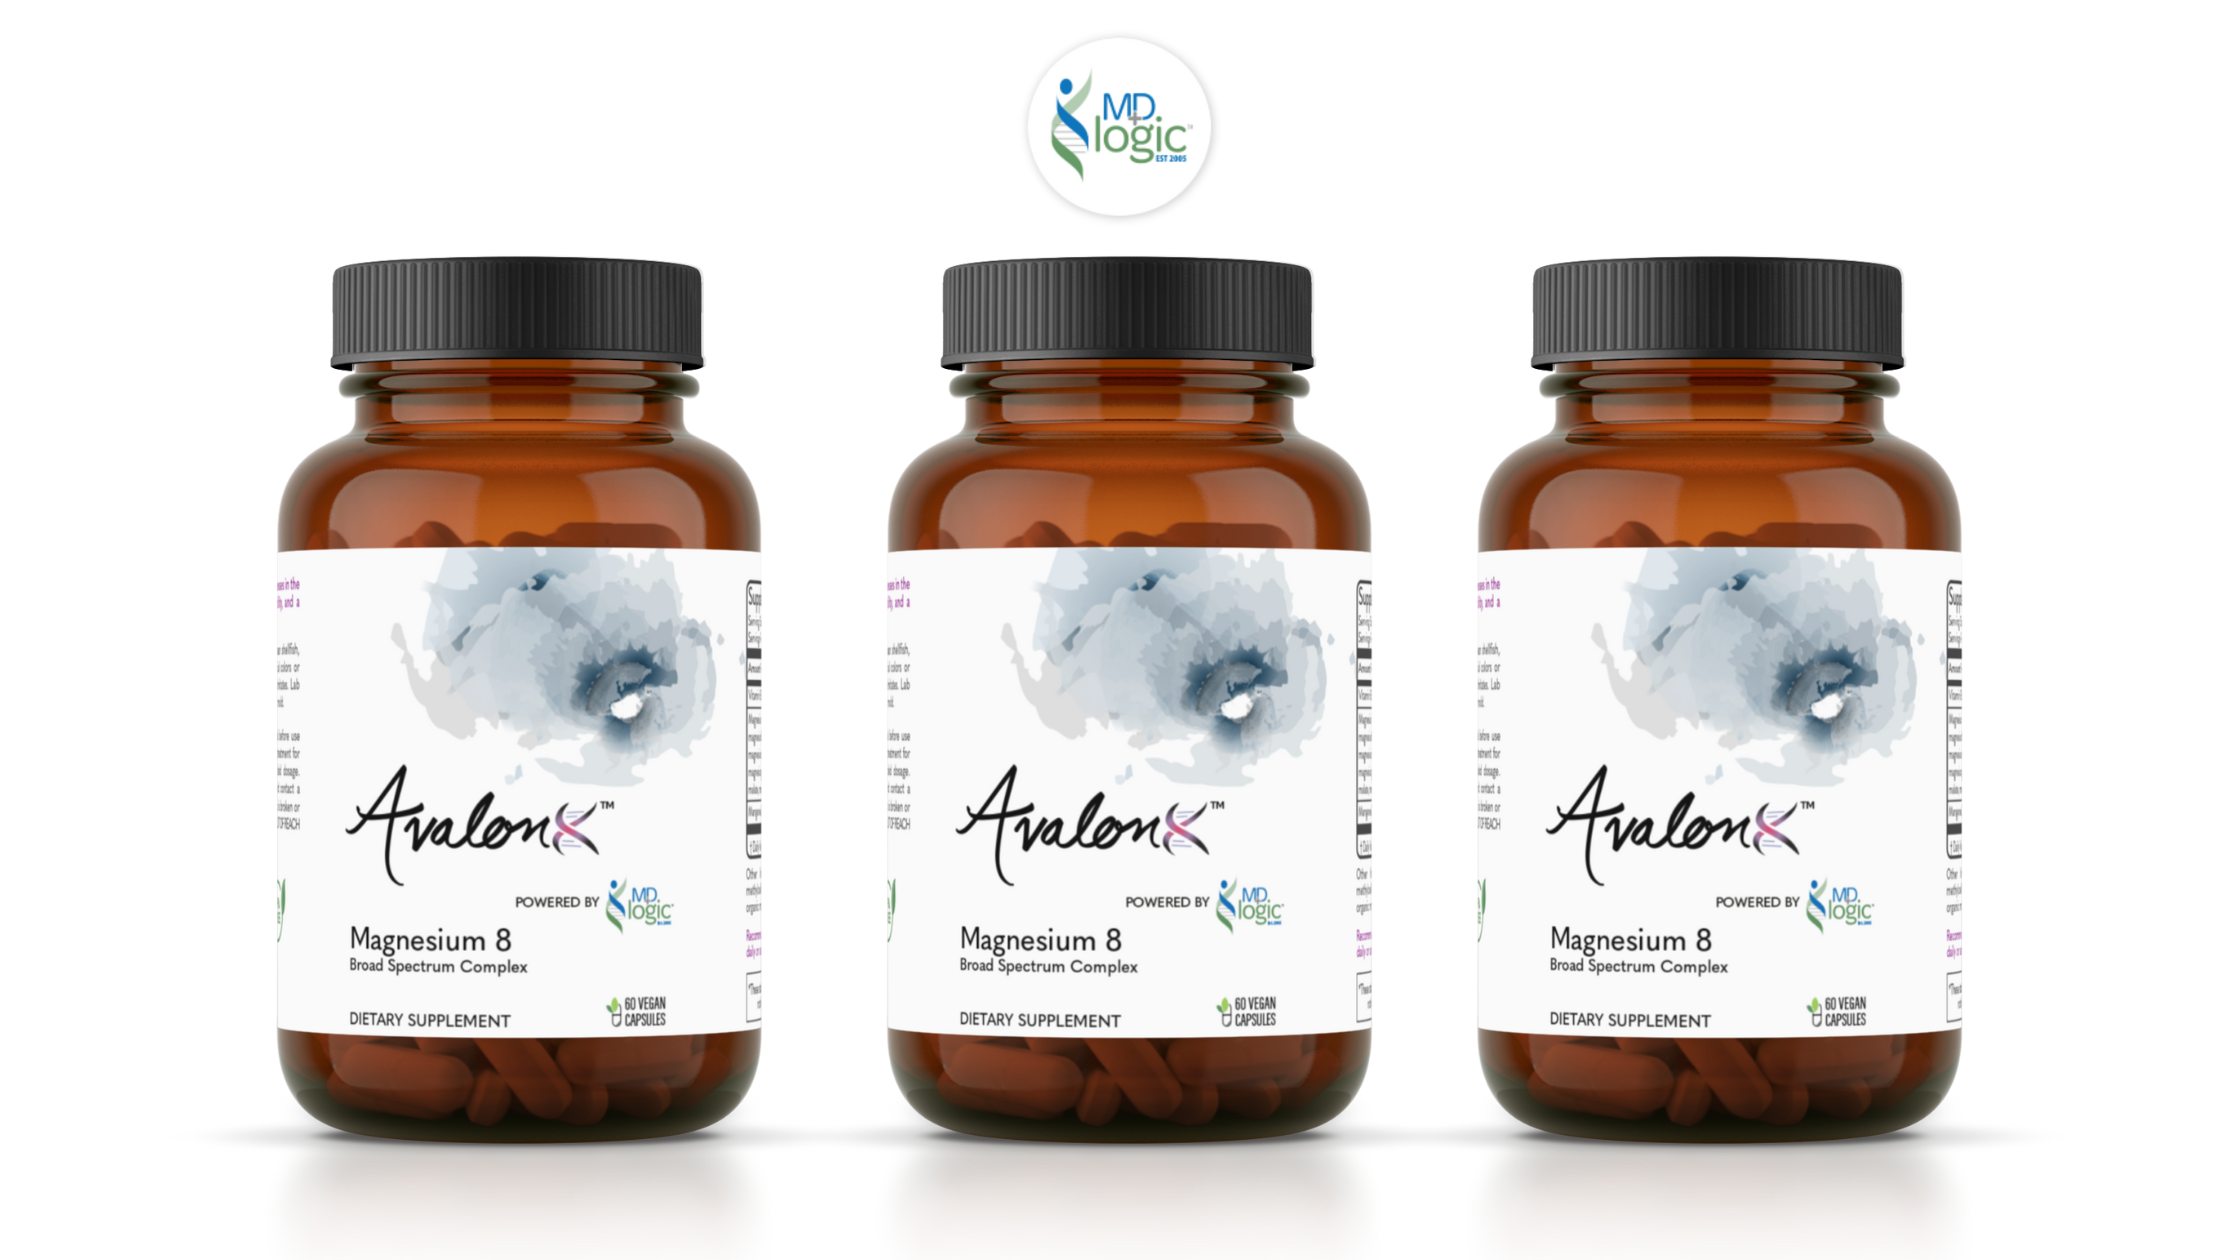 AvalonX + MD Logic Health Magnesium 8